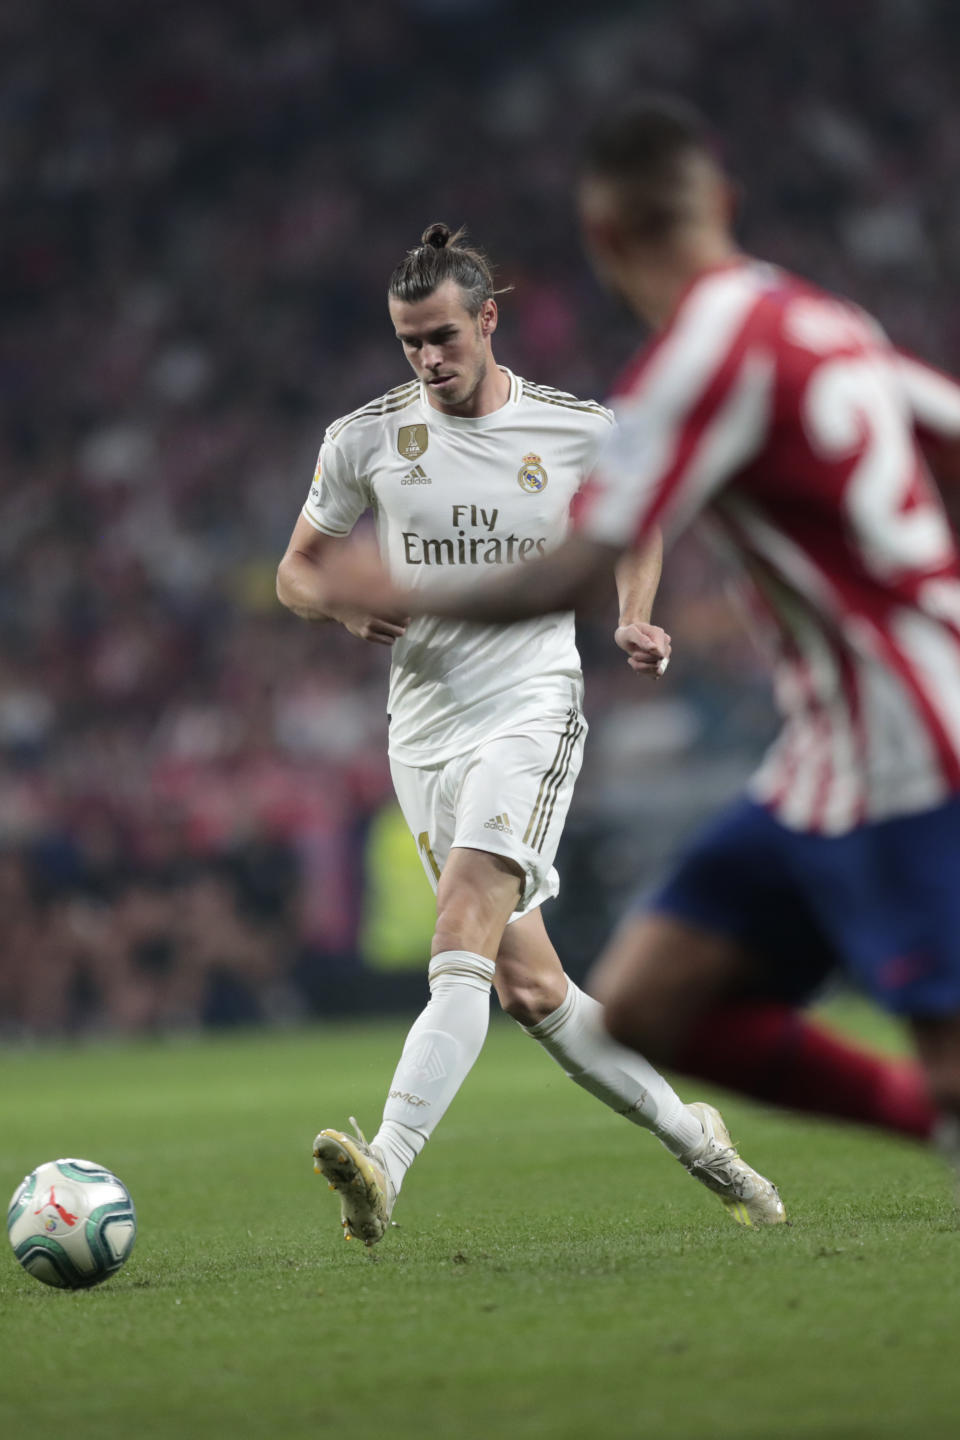 Real Madrid's Gareth Bale plays the ball during the Spanish La Liga soccer match between Atletico Madrid and Real Madrid at the Wanda Metropolitano stadium in Madrid, Saturday, Sept. 28, 2019. (AP Photo/Bernat Armangue)